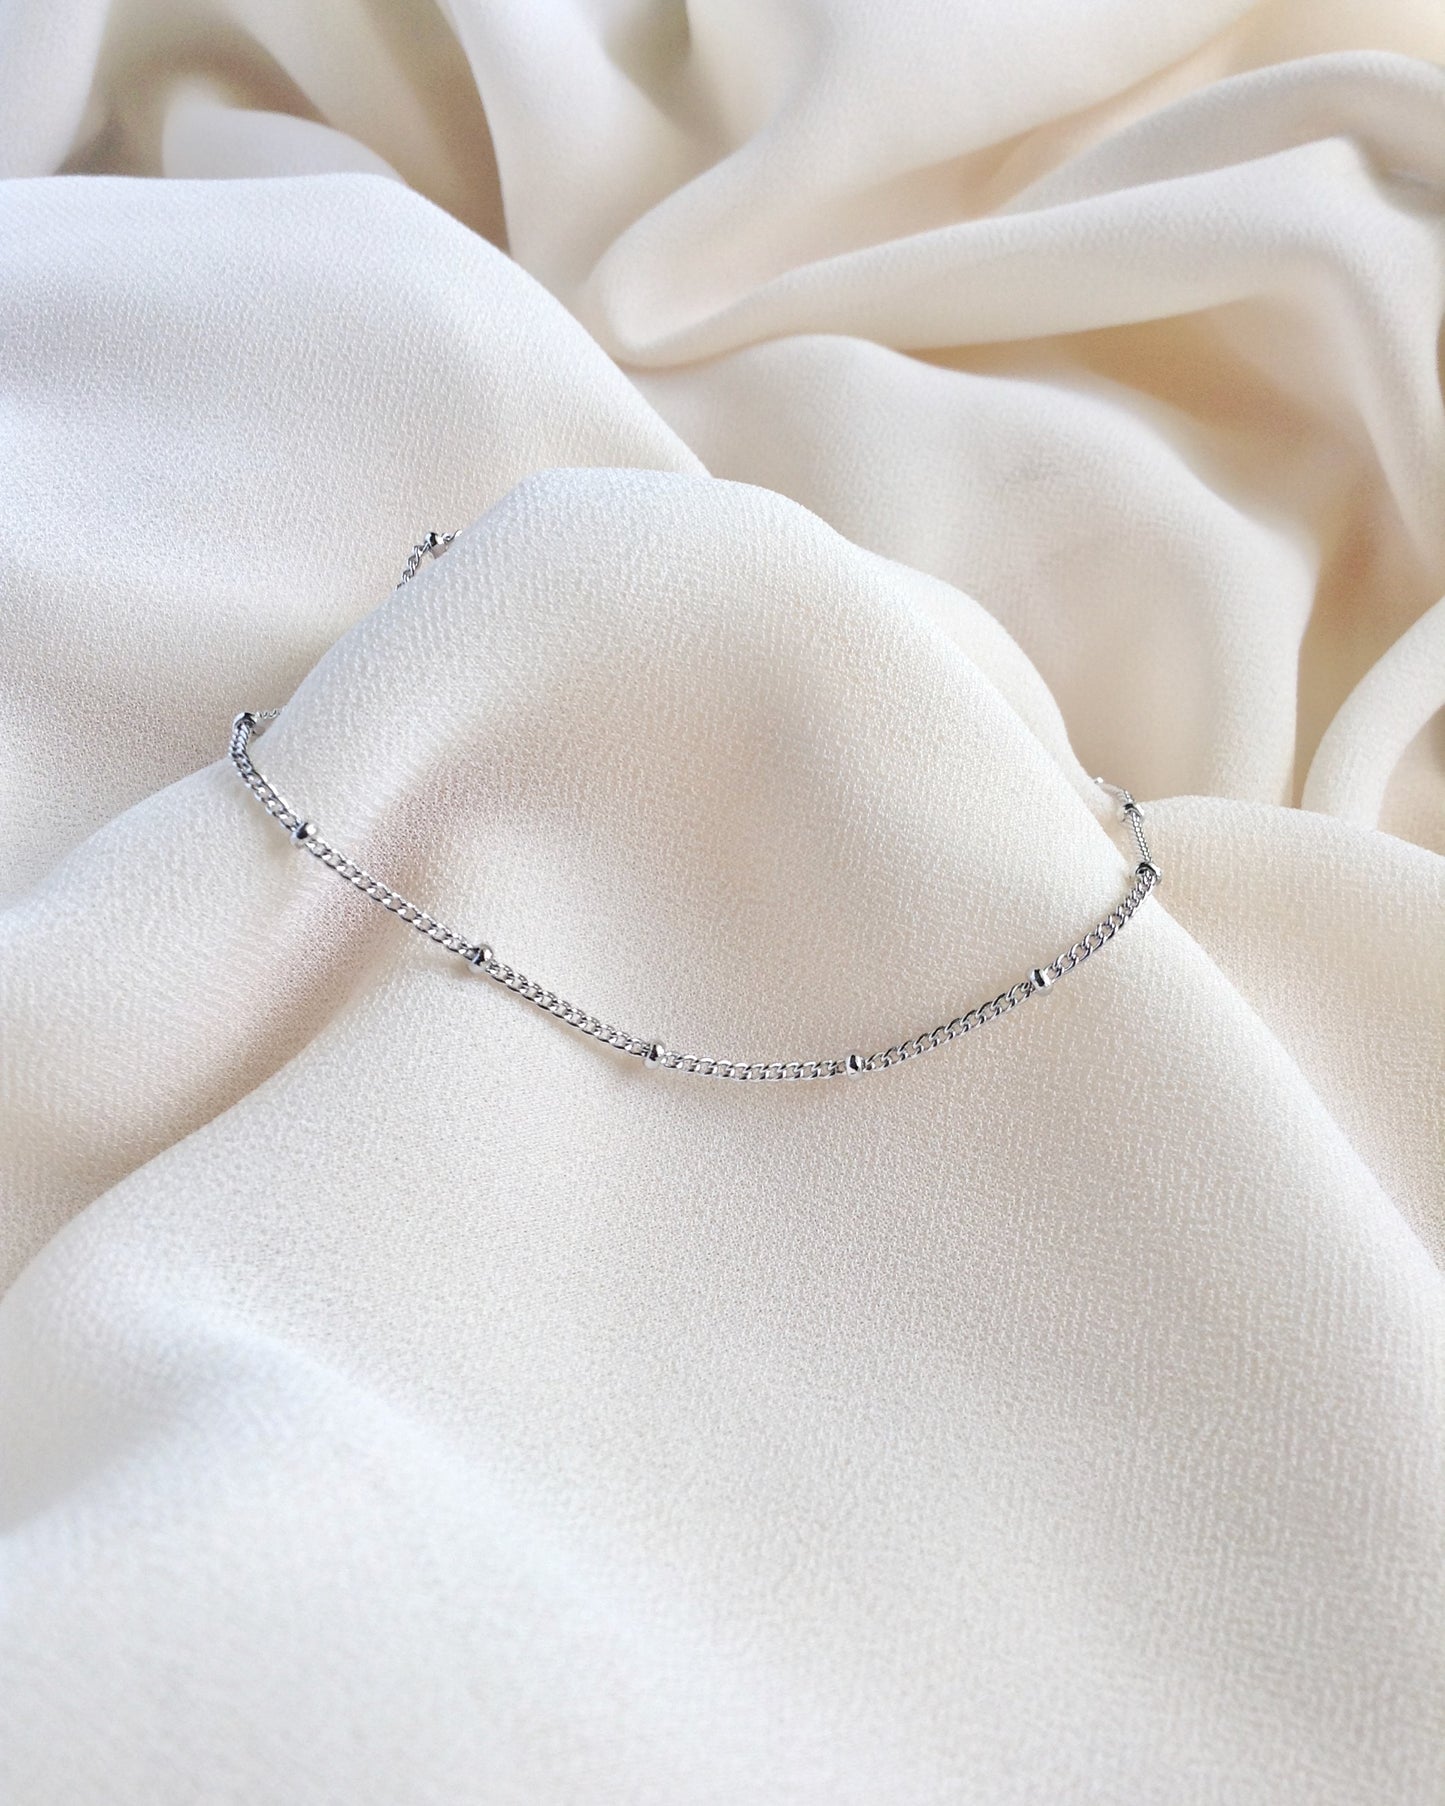 Simple Everyday Bracelet | Delicate Chain Bracelet | IB Jewelry